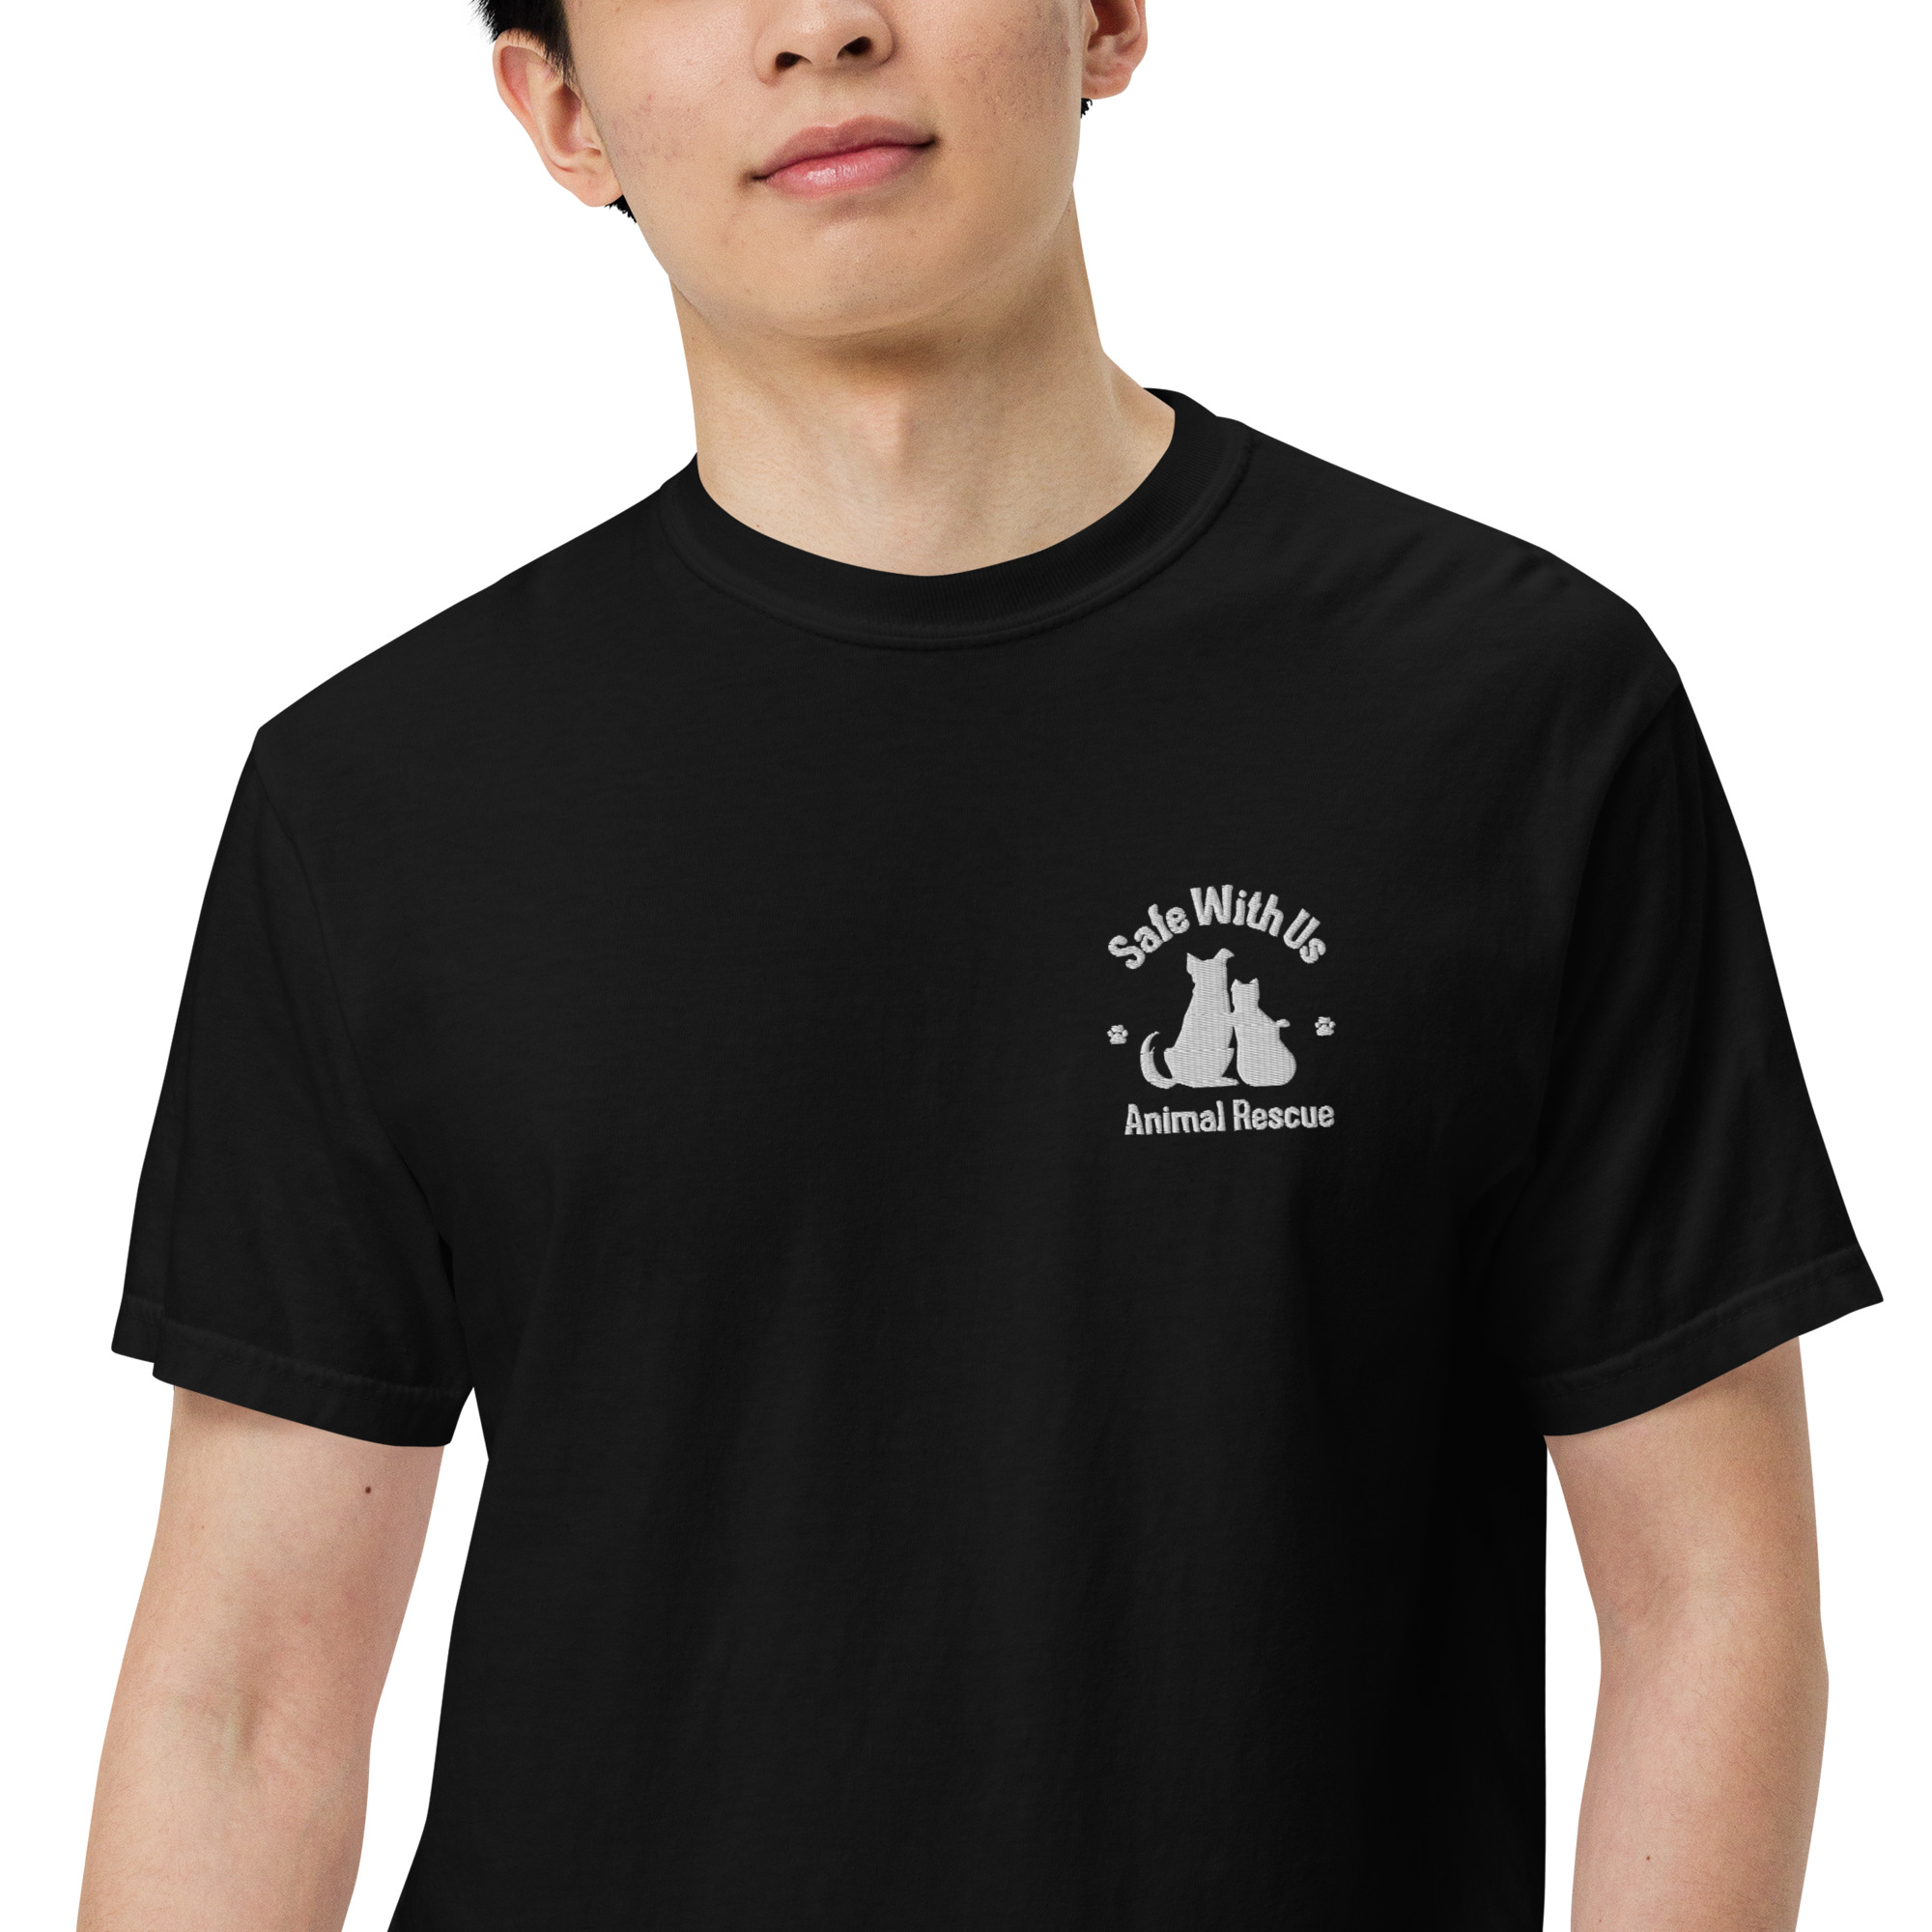 mens-garment-dyed-heavyweight-t-shirt-black-zoomed-in-2-6415fedc2451f.jpg